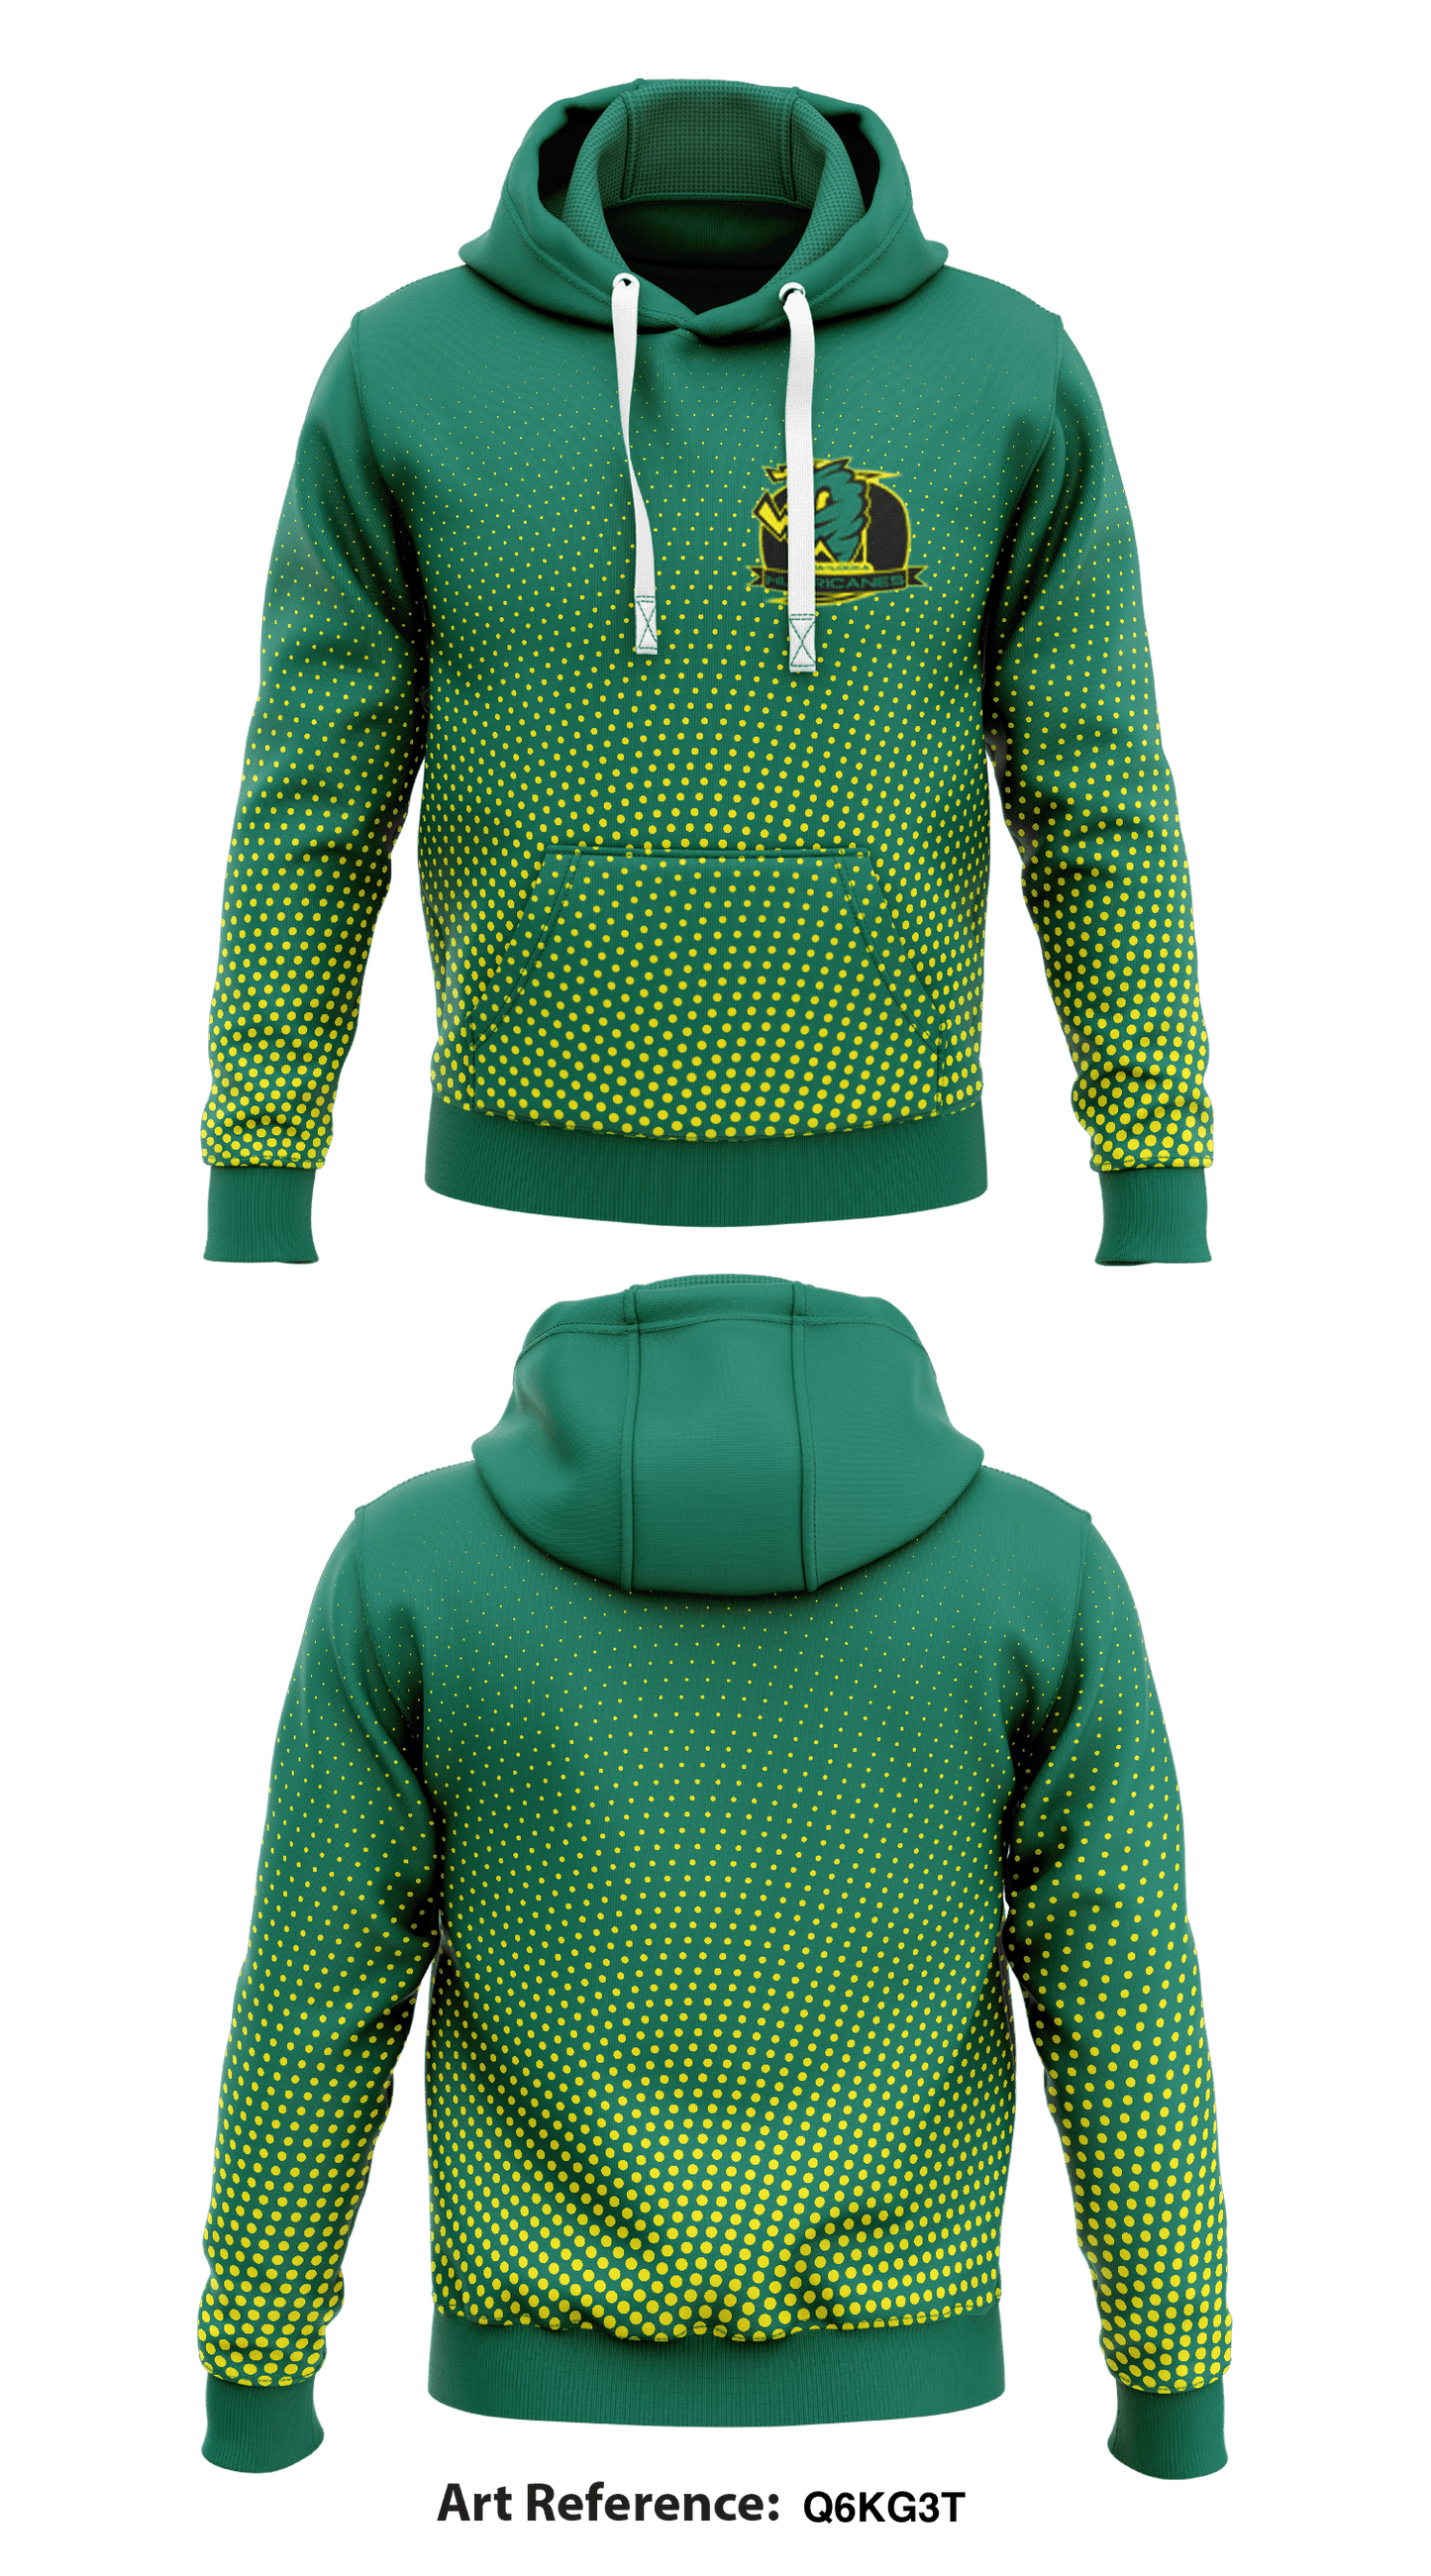 Opa-Locka Hurricanes   Core Men's Hooded Performance Sweatshirt - q6KG3t